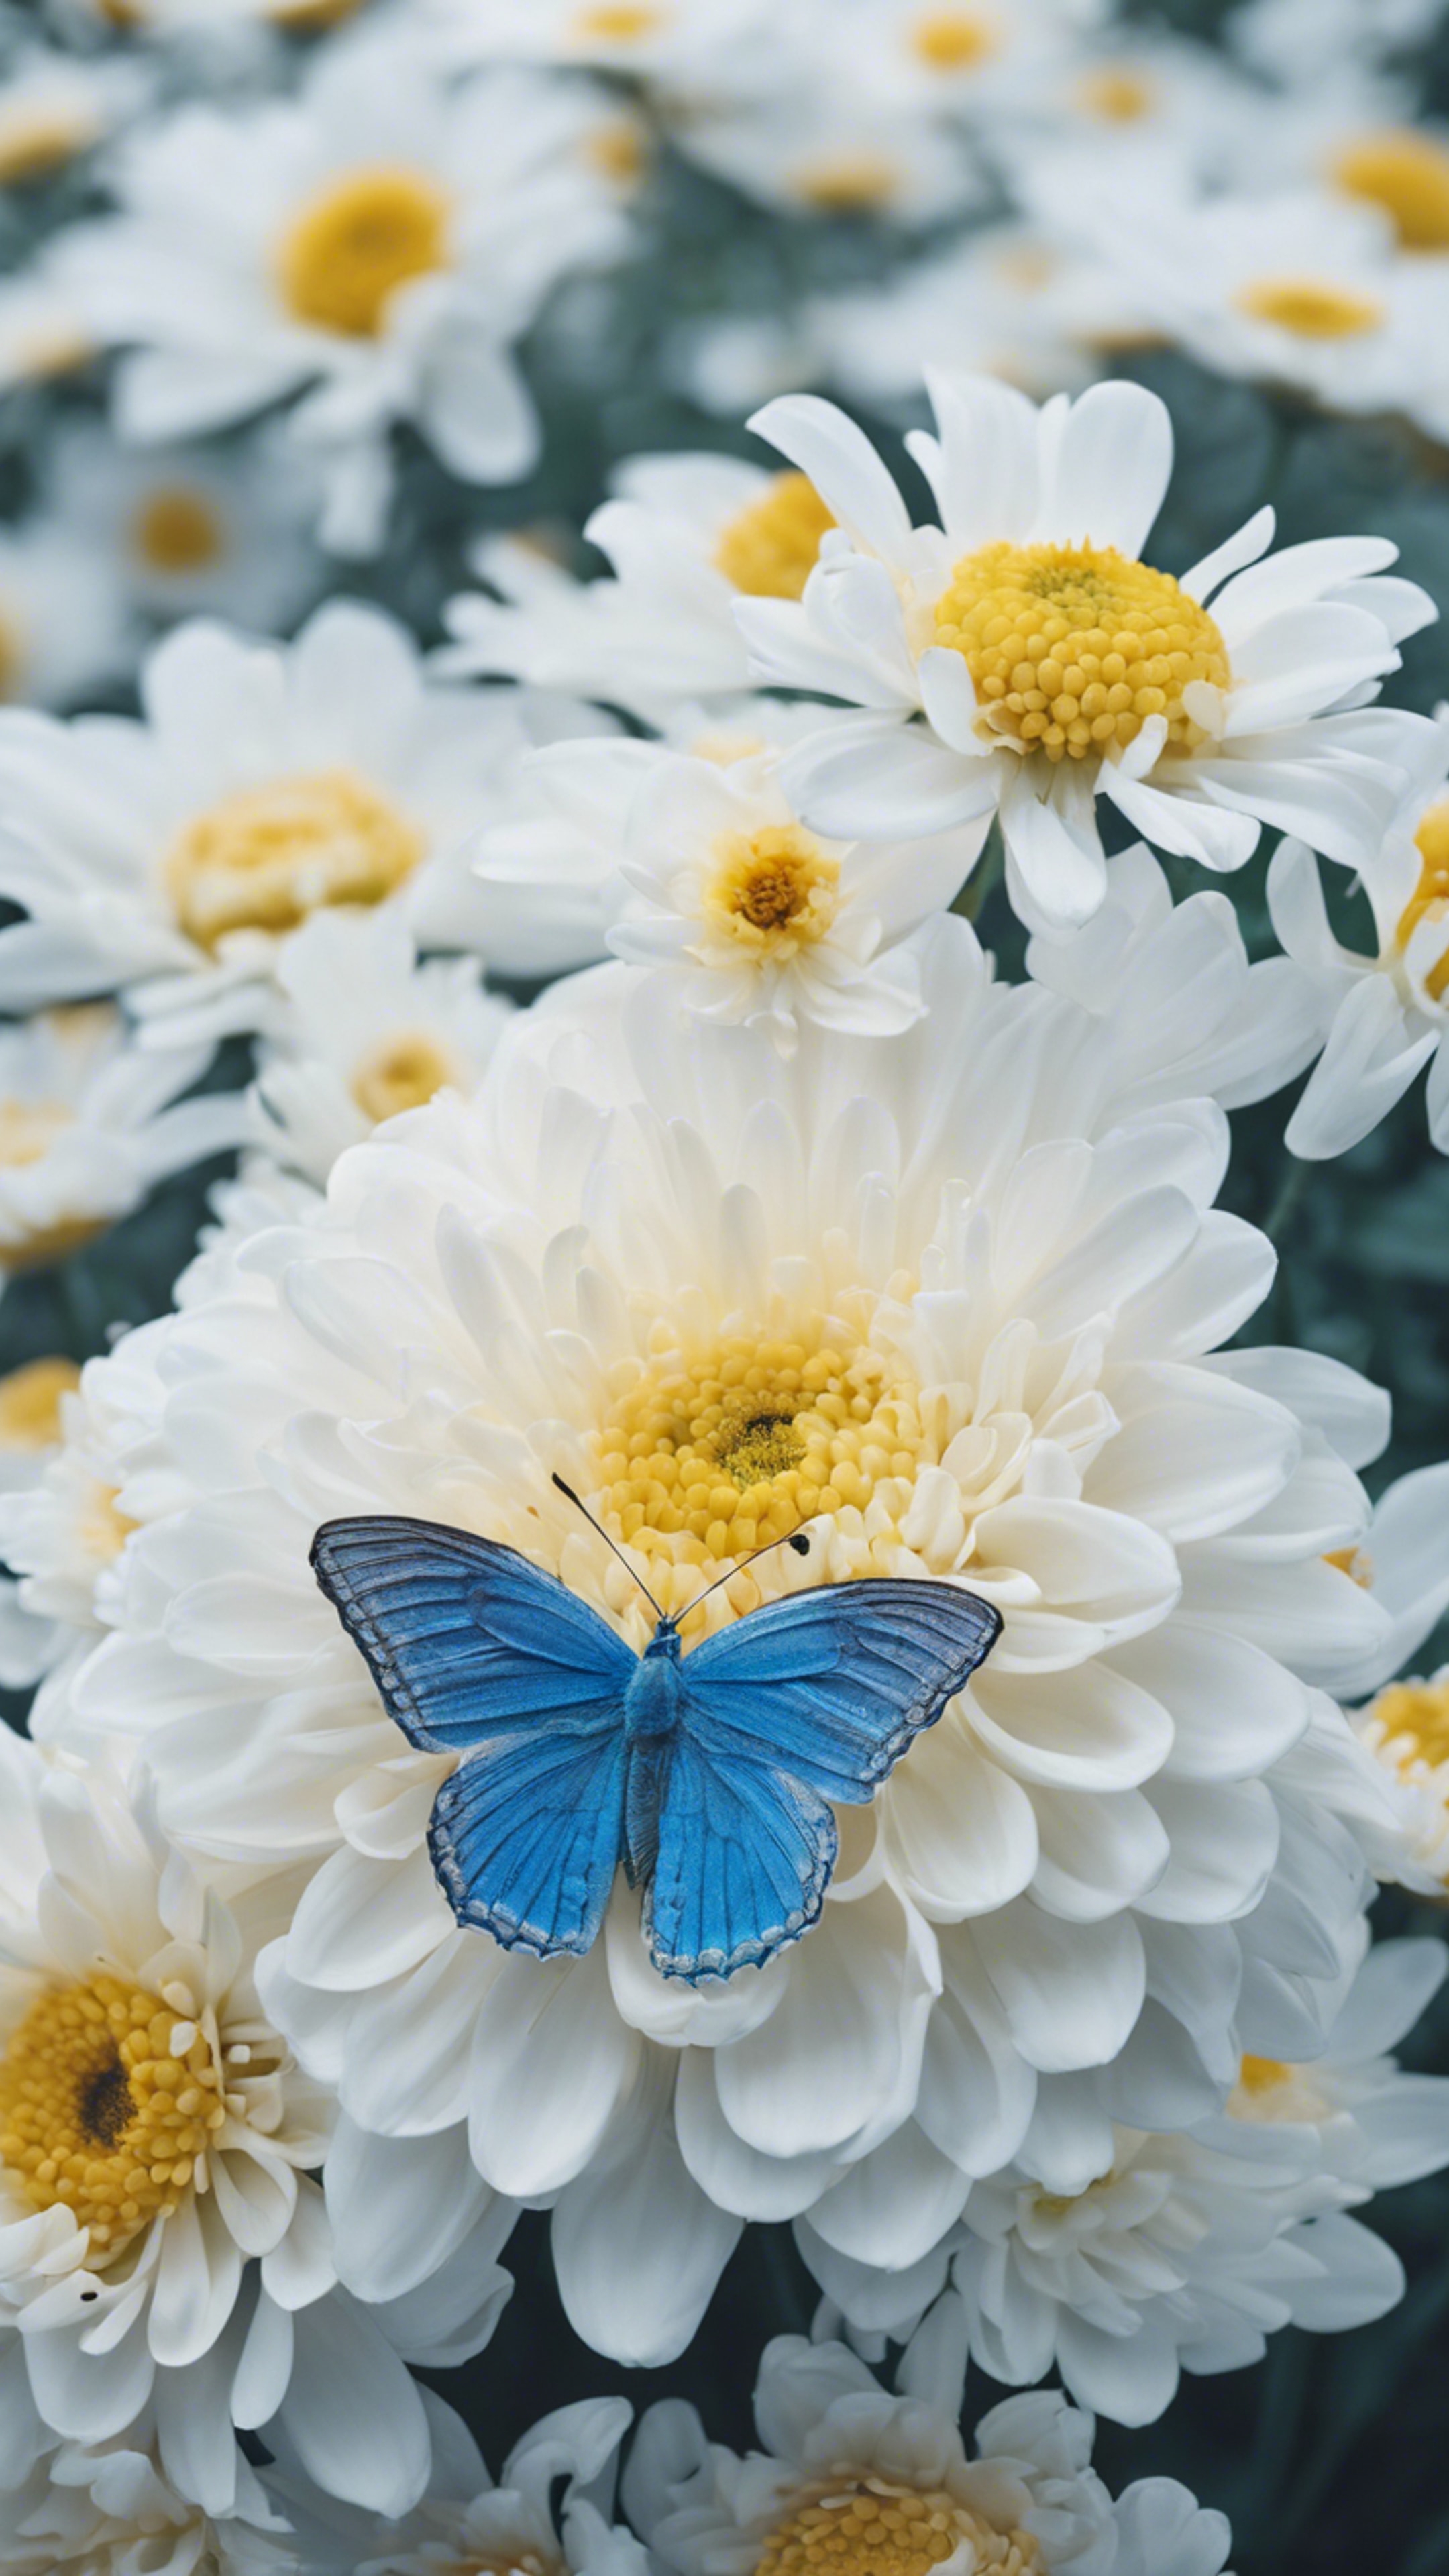 A serene blue butterfly resting on a white chrysanthemum in full bloom. Wallpaper[c3e7c5c24c154b99a11b]